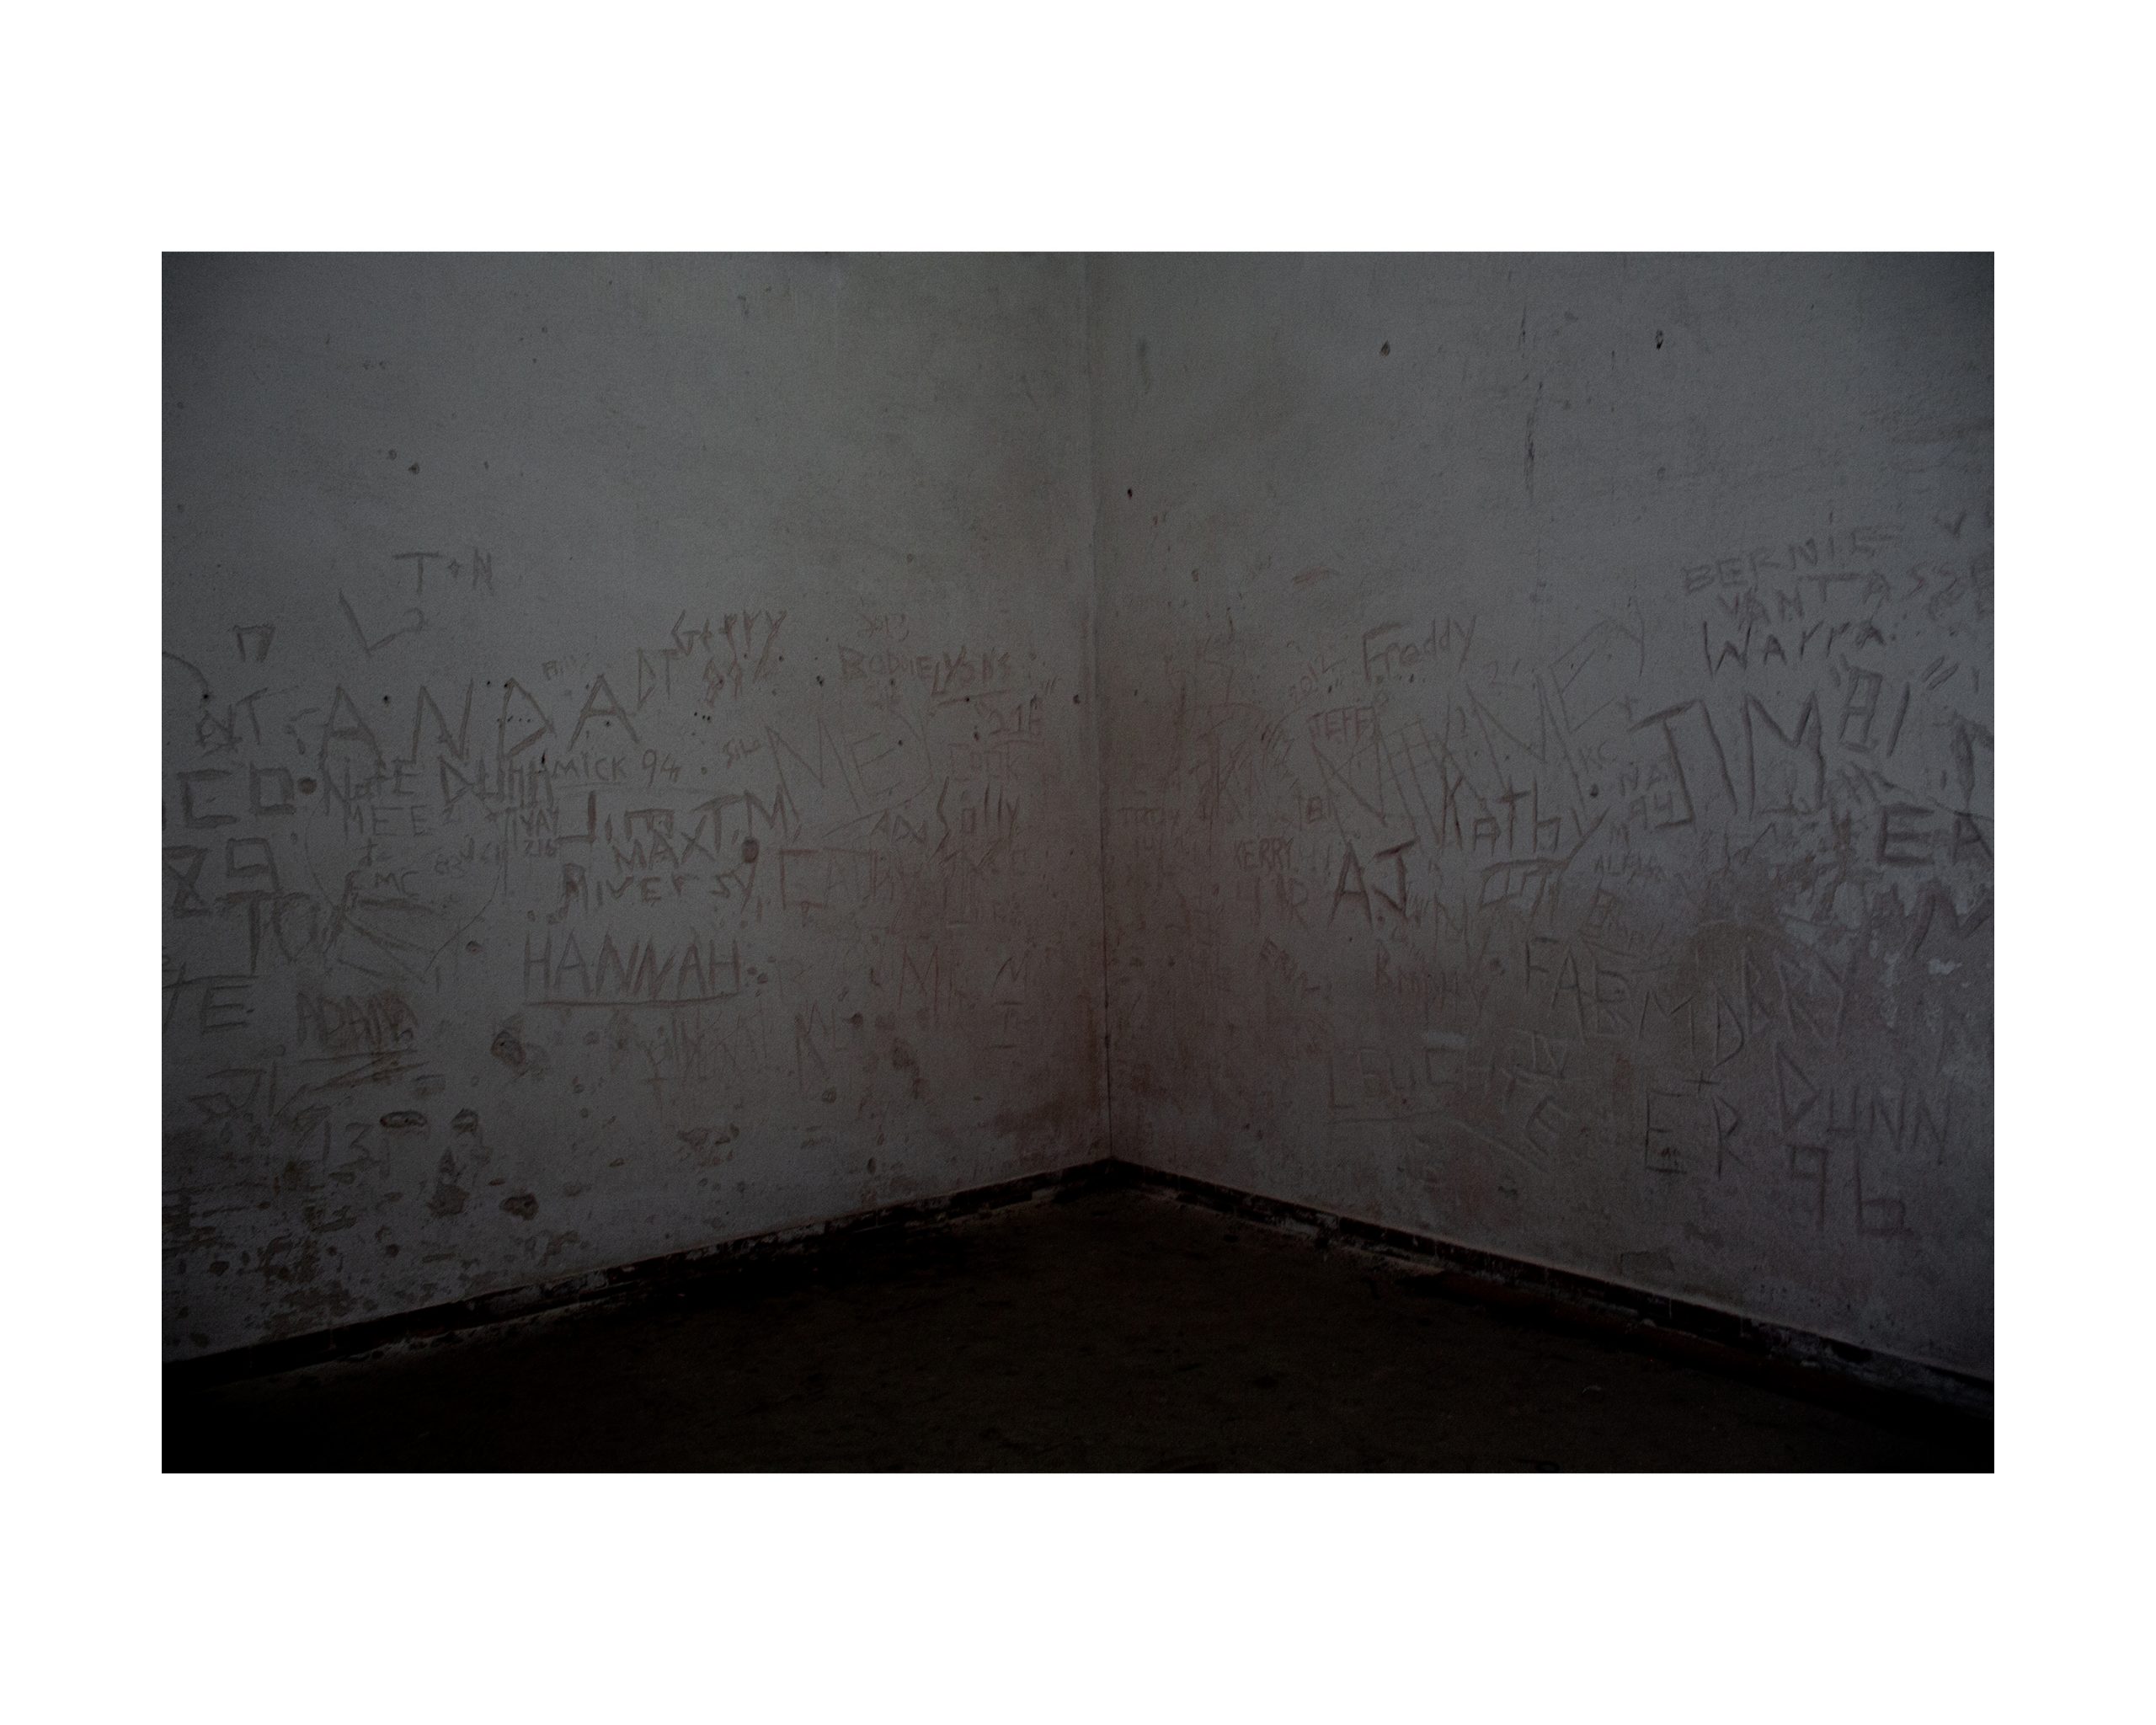 dark corner with writing on walls on georges island